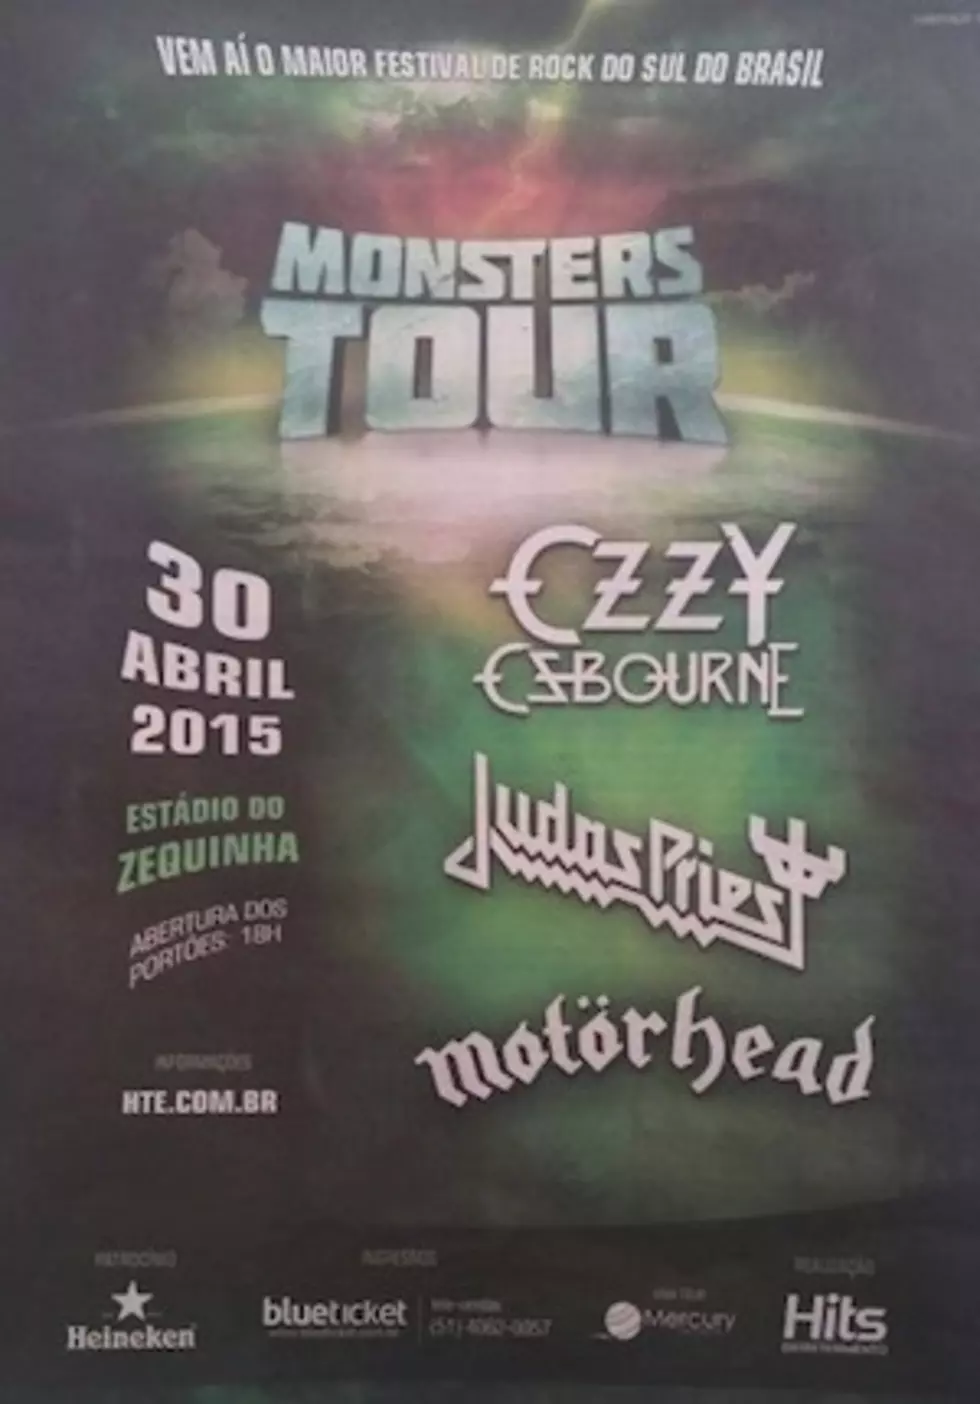 Ozzy Osbourne, Judas Priest + Motorhead to Play 2015 &#8216;Monsters Tour&#8217; Date in Brazil